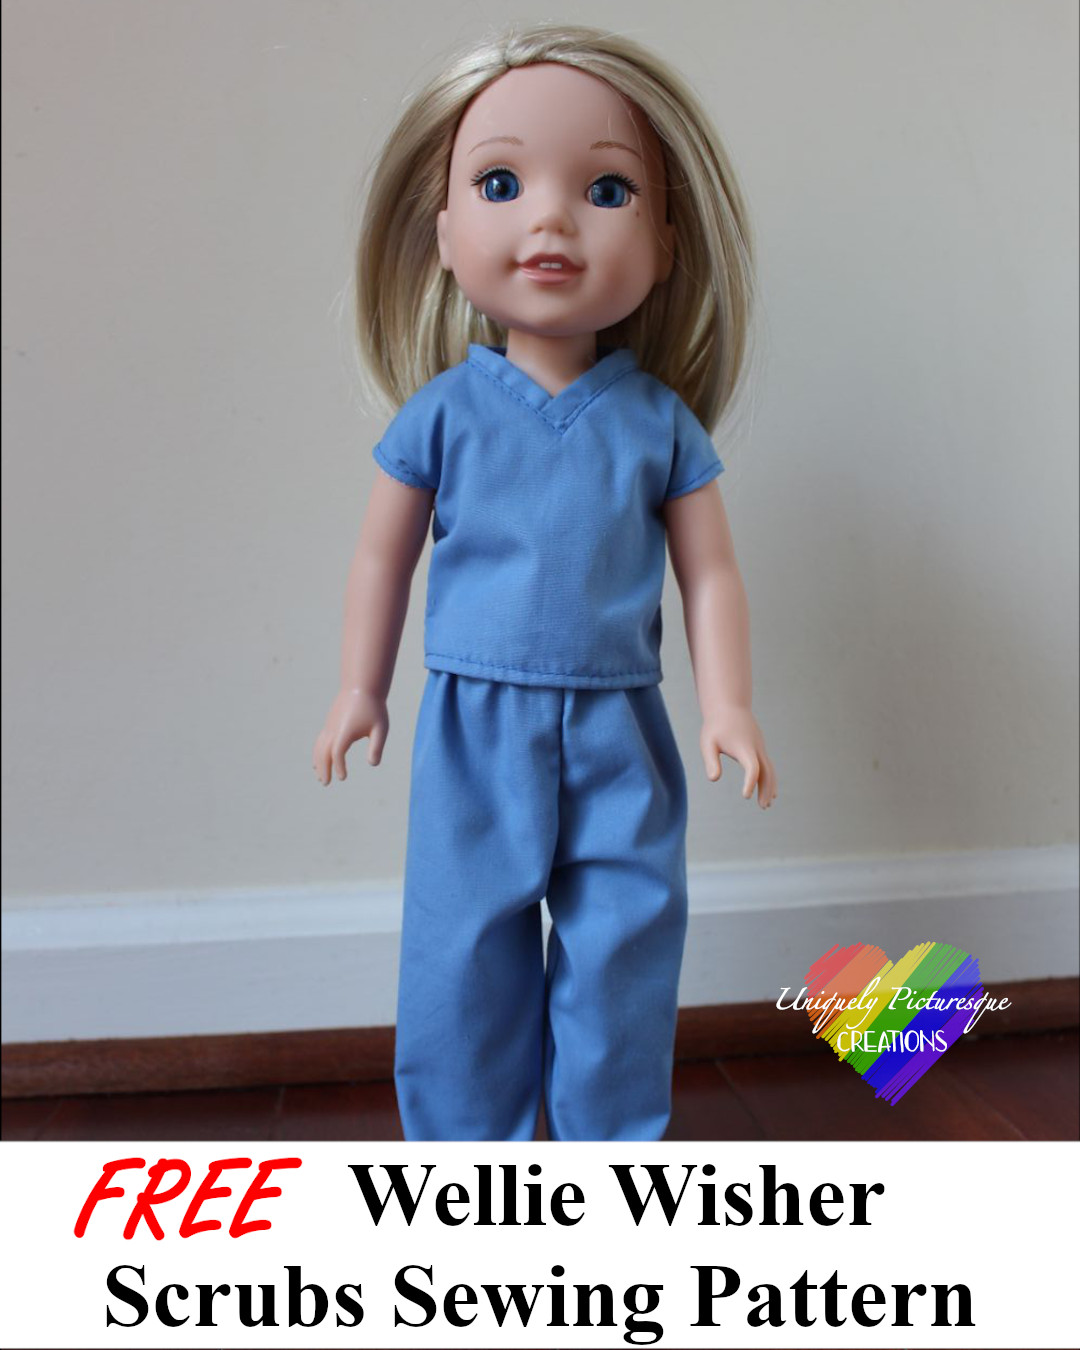 FREE Wellie Wisher Scrubs Sewing Pattern